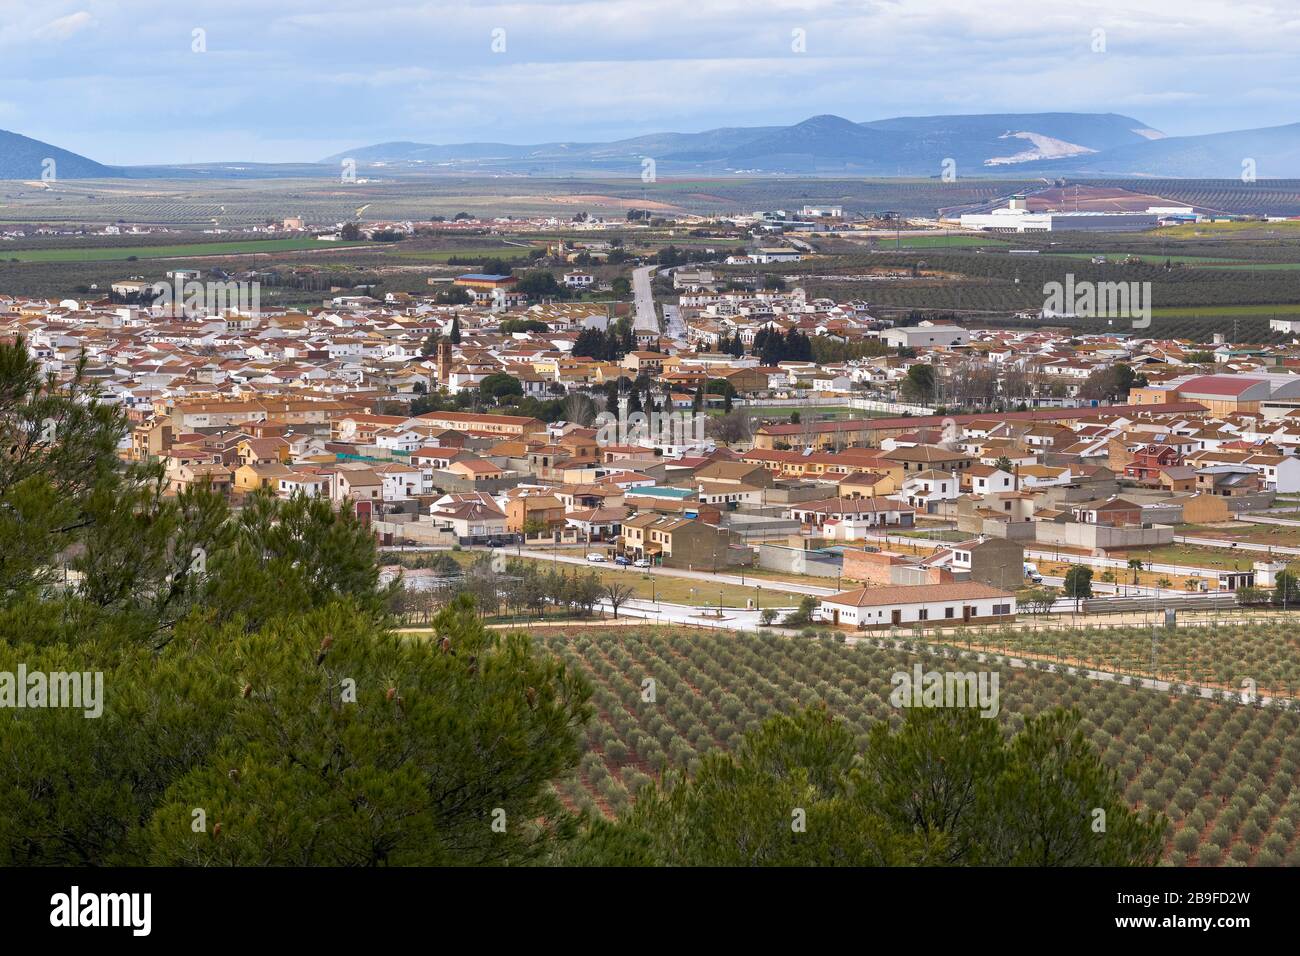 views of the town of Humilladero, Antequera region, Malaga. Spain Stock Photo